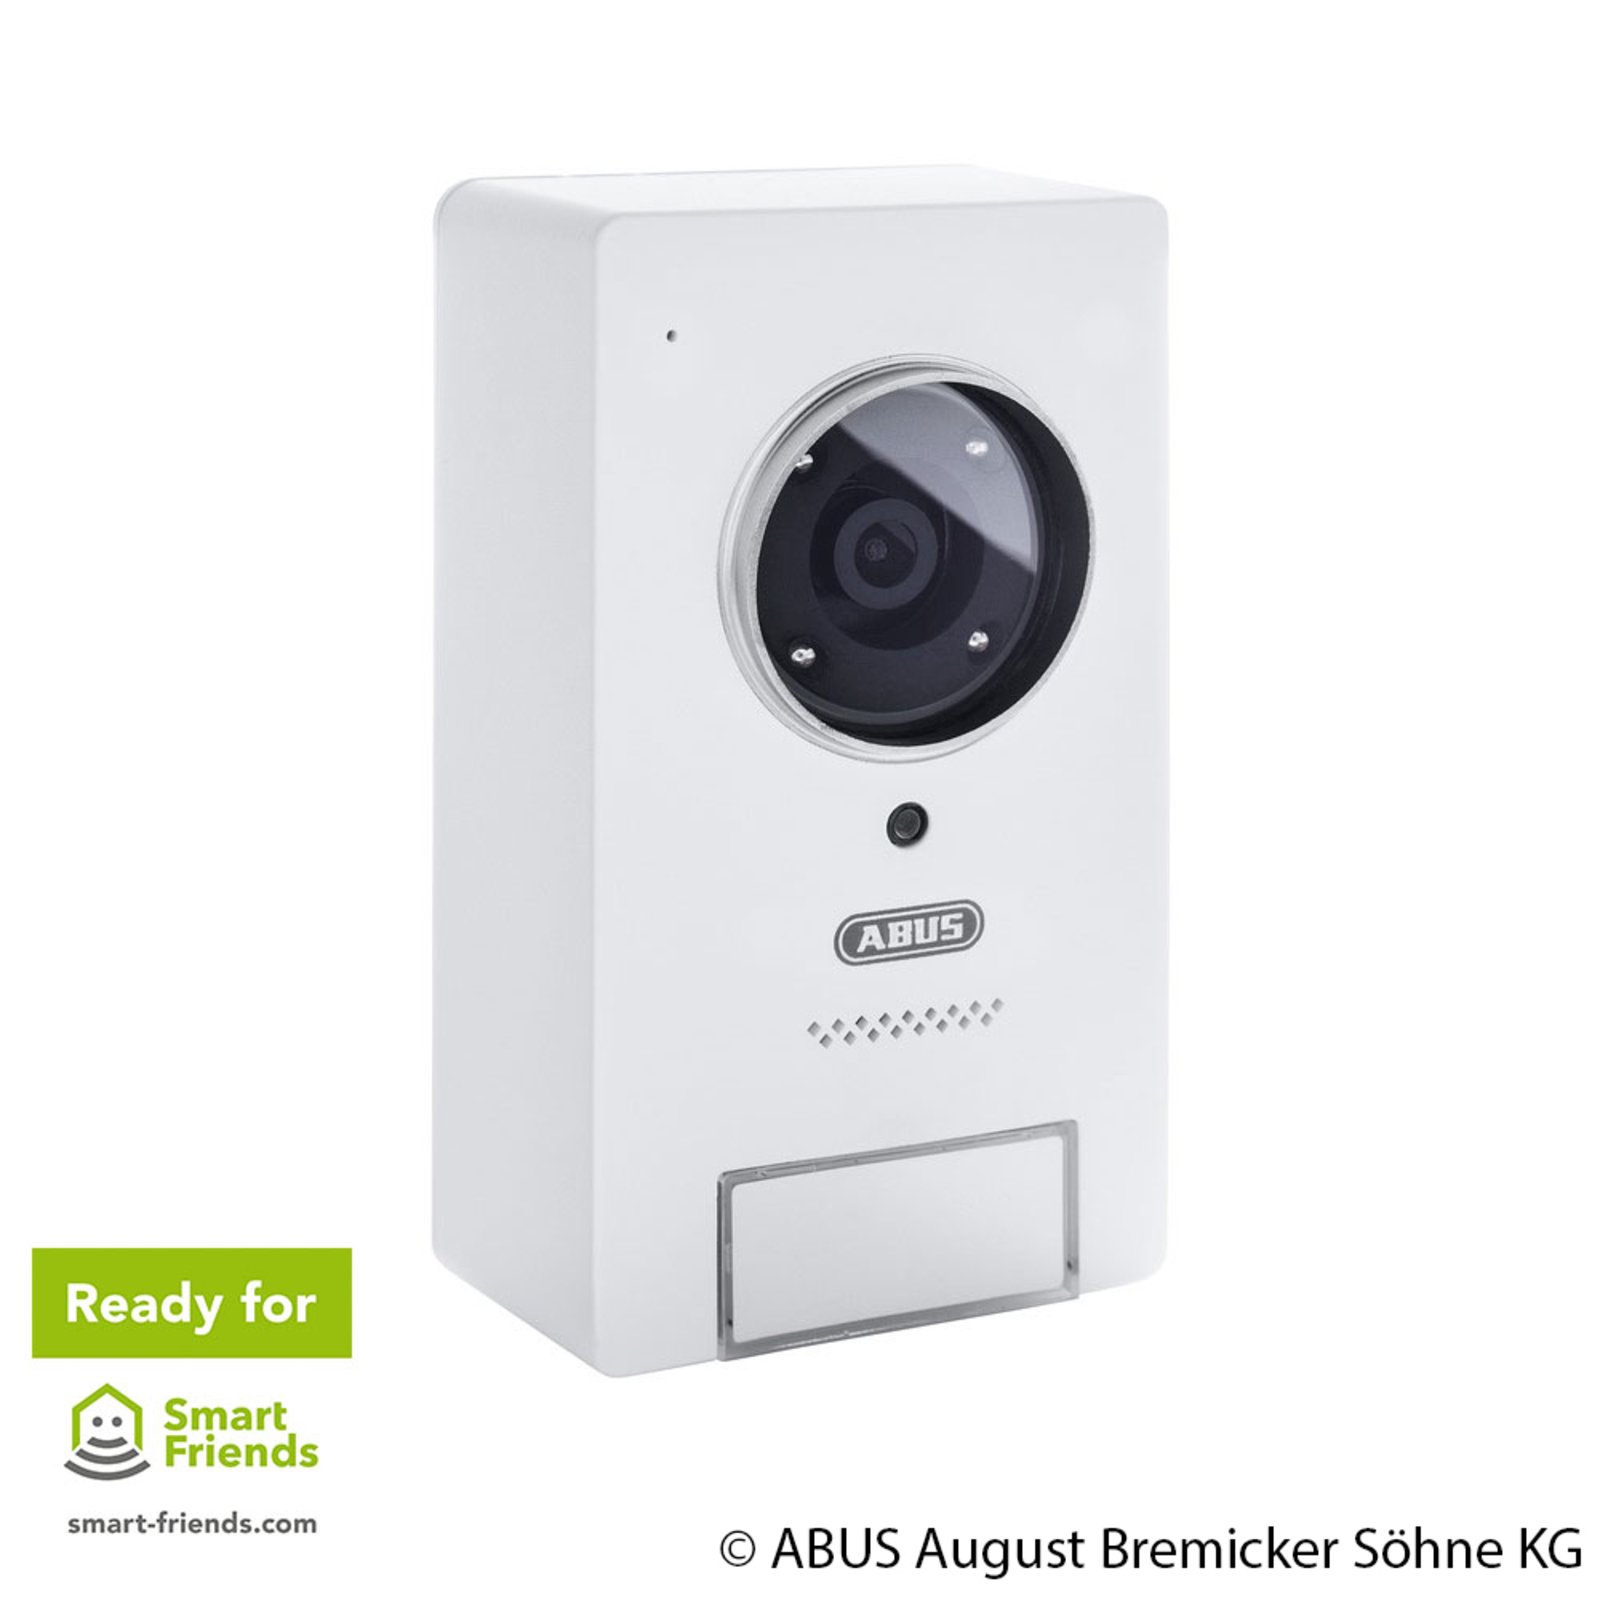 ABUS Smart Security WLAN domofon wideo